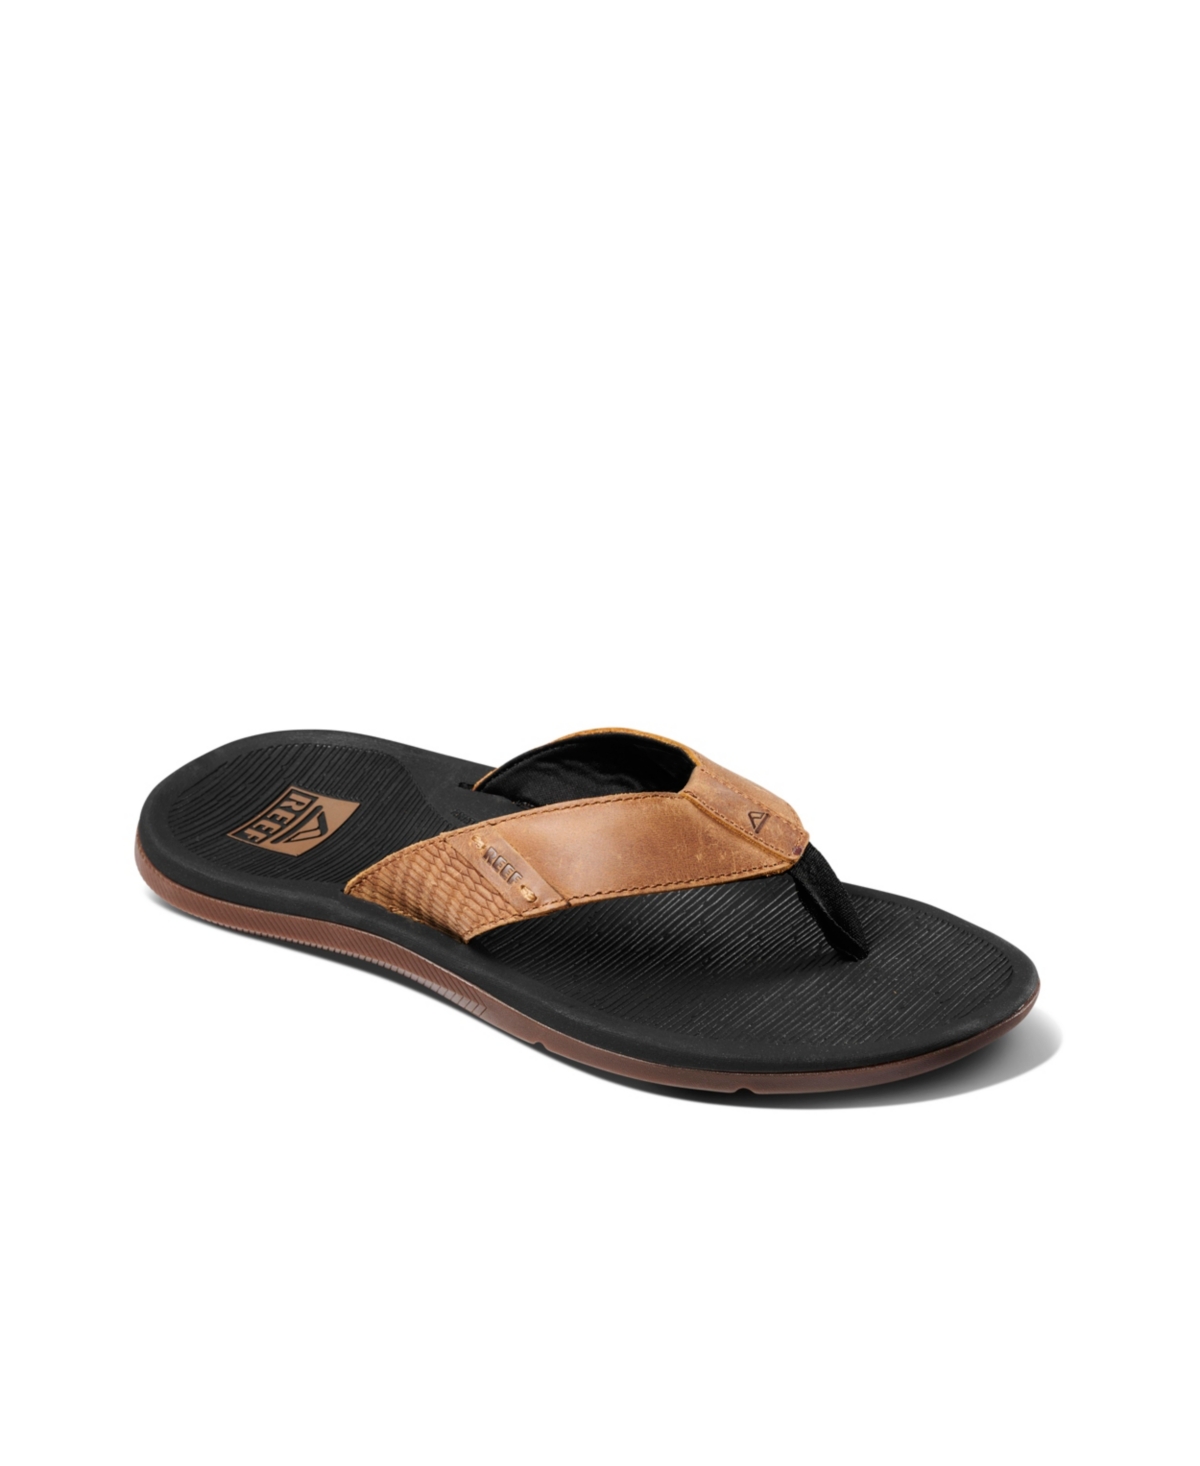 Men's Santa Ana Le Comfort Fit Sandals - Black and Tan